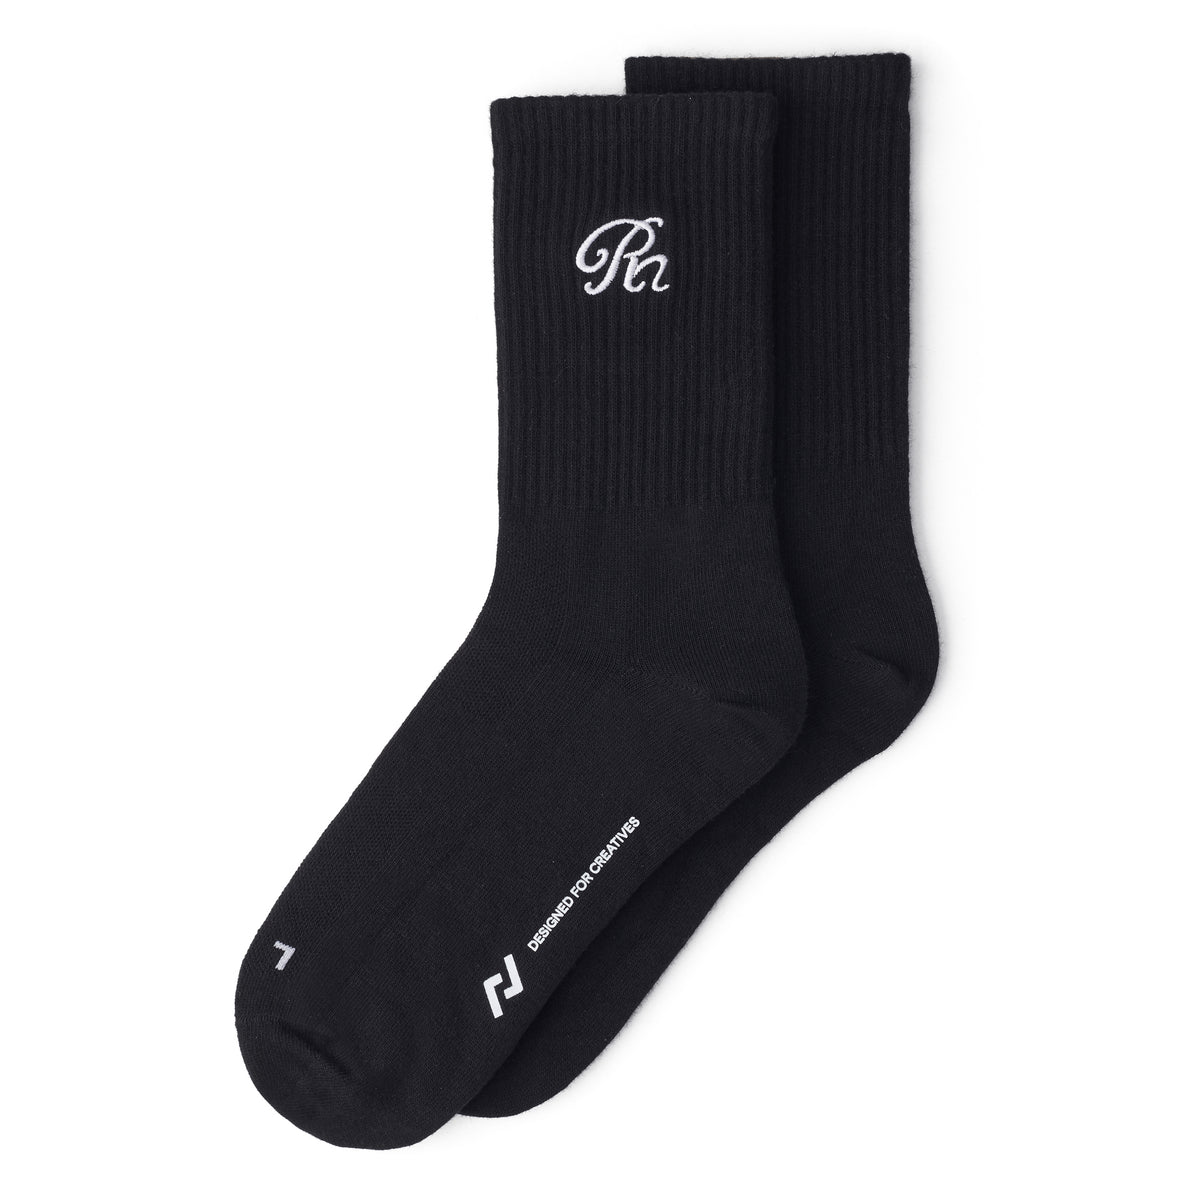 Charcoal Cap & Black Socks Gift Bundle